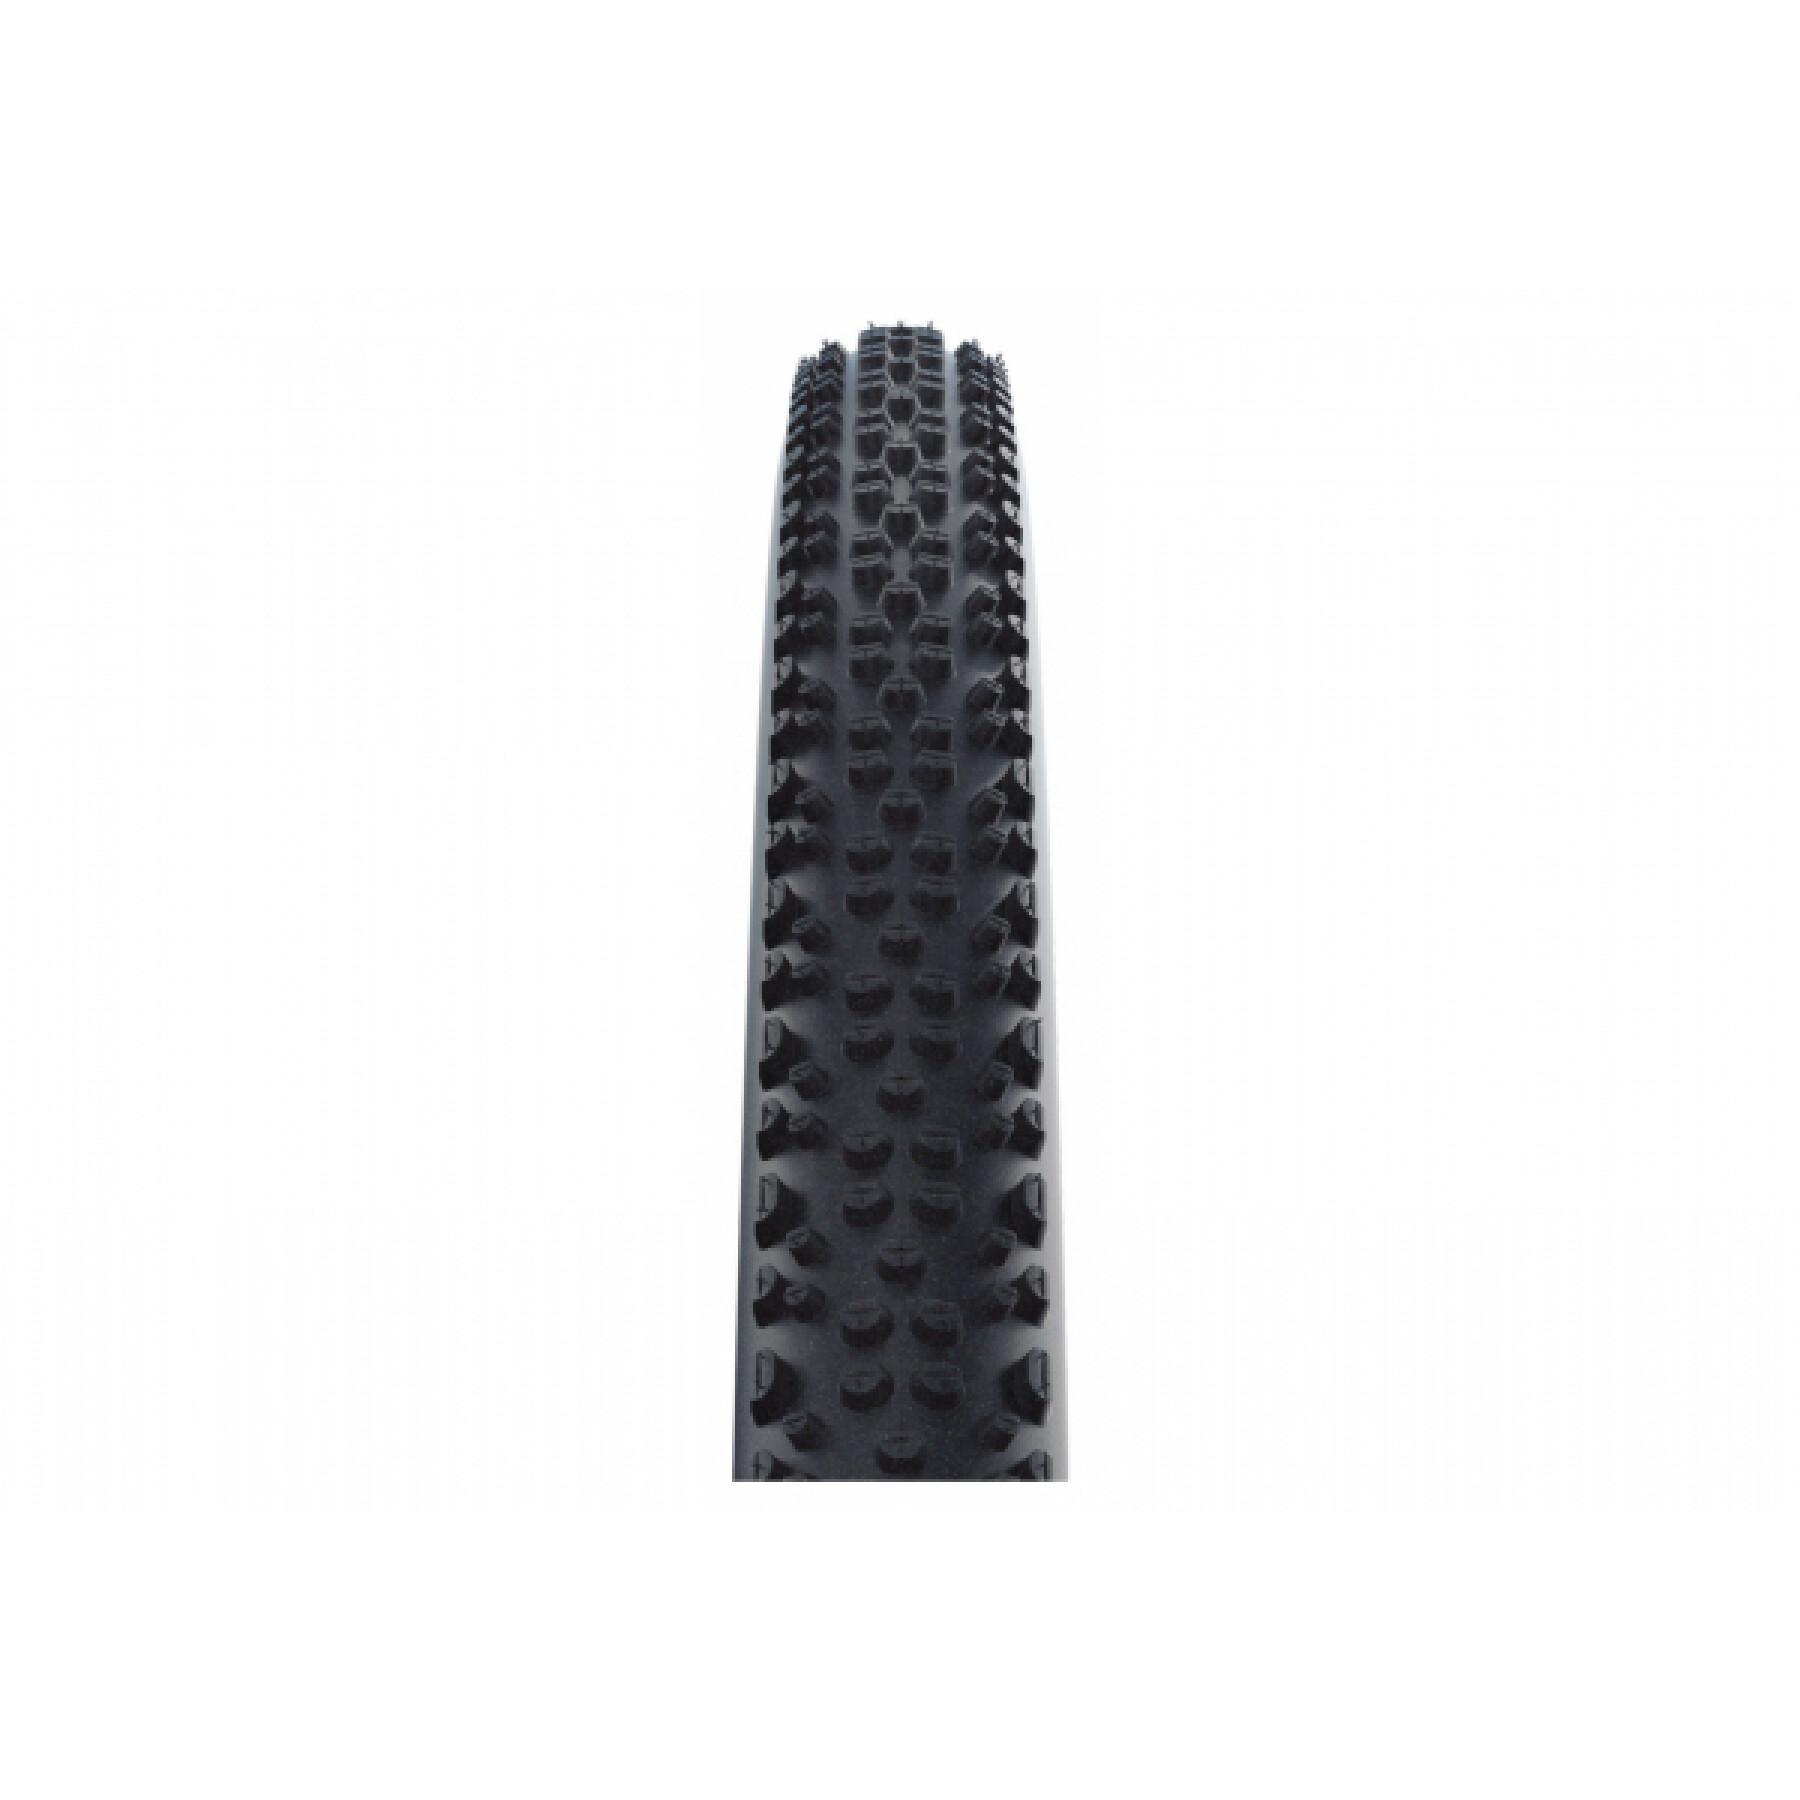 Soft tire Schwalbe X-One Allround 28x1,35/700x35c Hs467 Snakeskin Evolution Tubeless